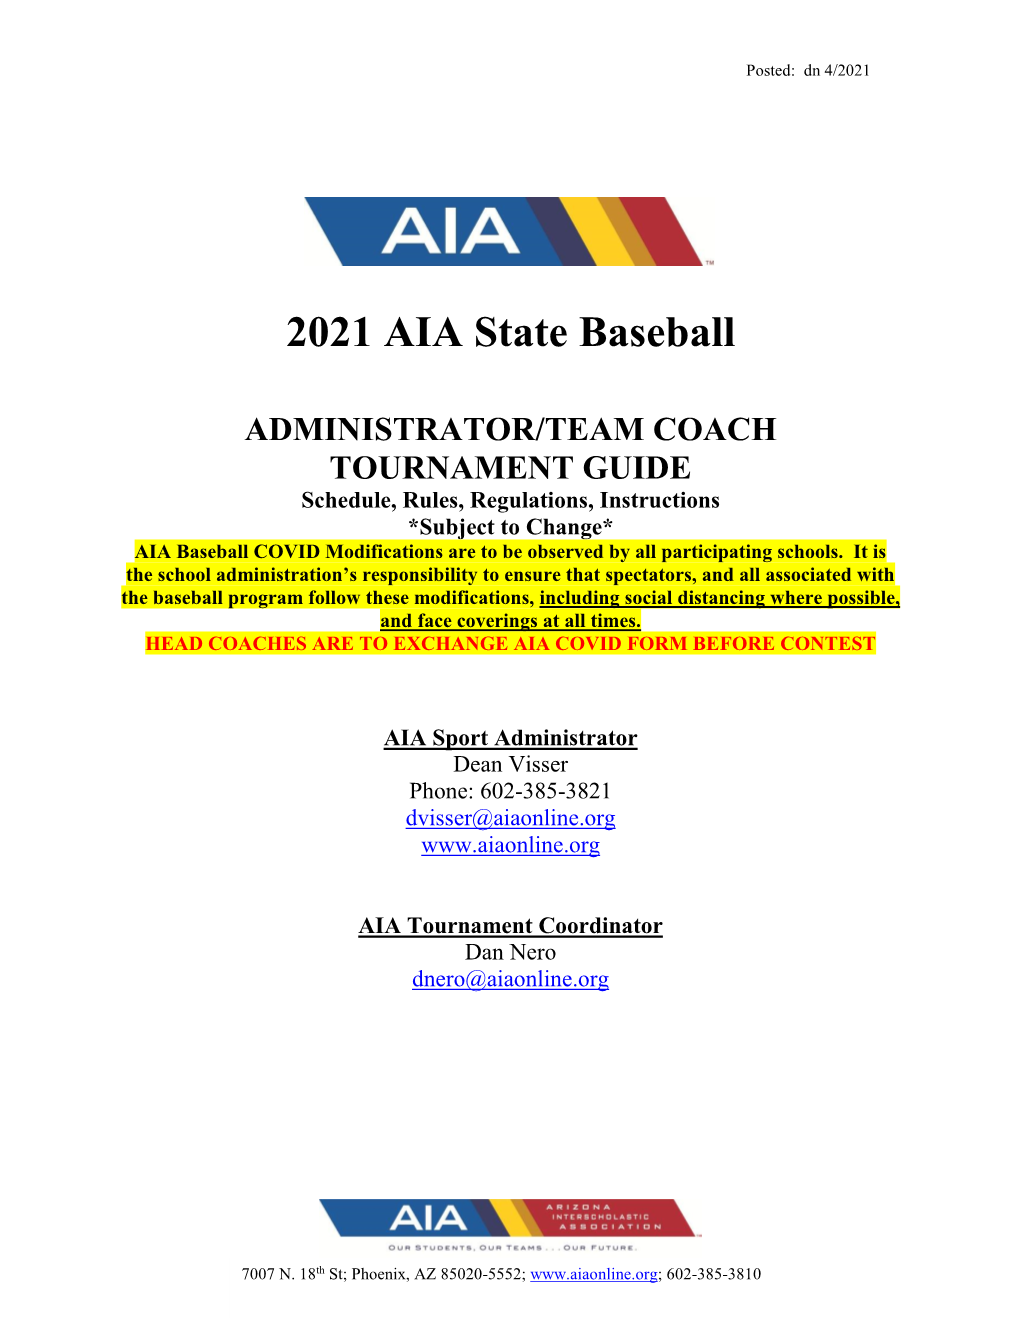 2021 AIA State Baseball Administrator / Team Coach Tournament Guide